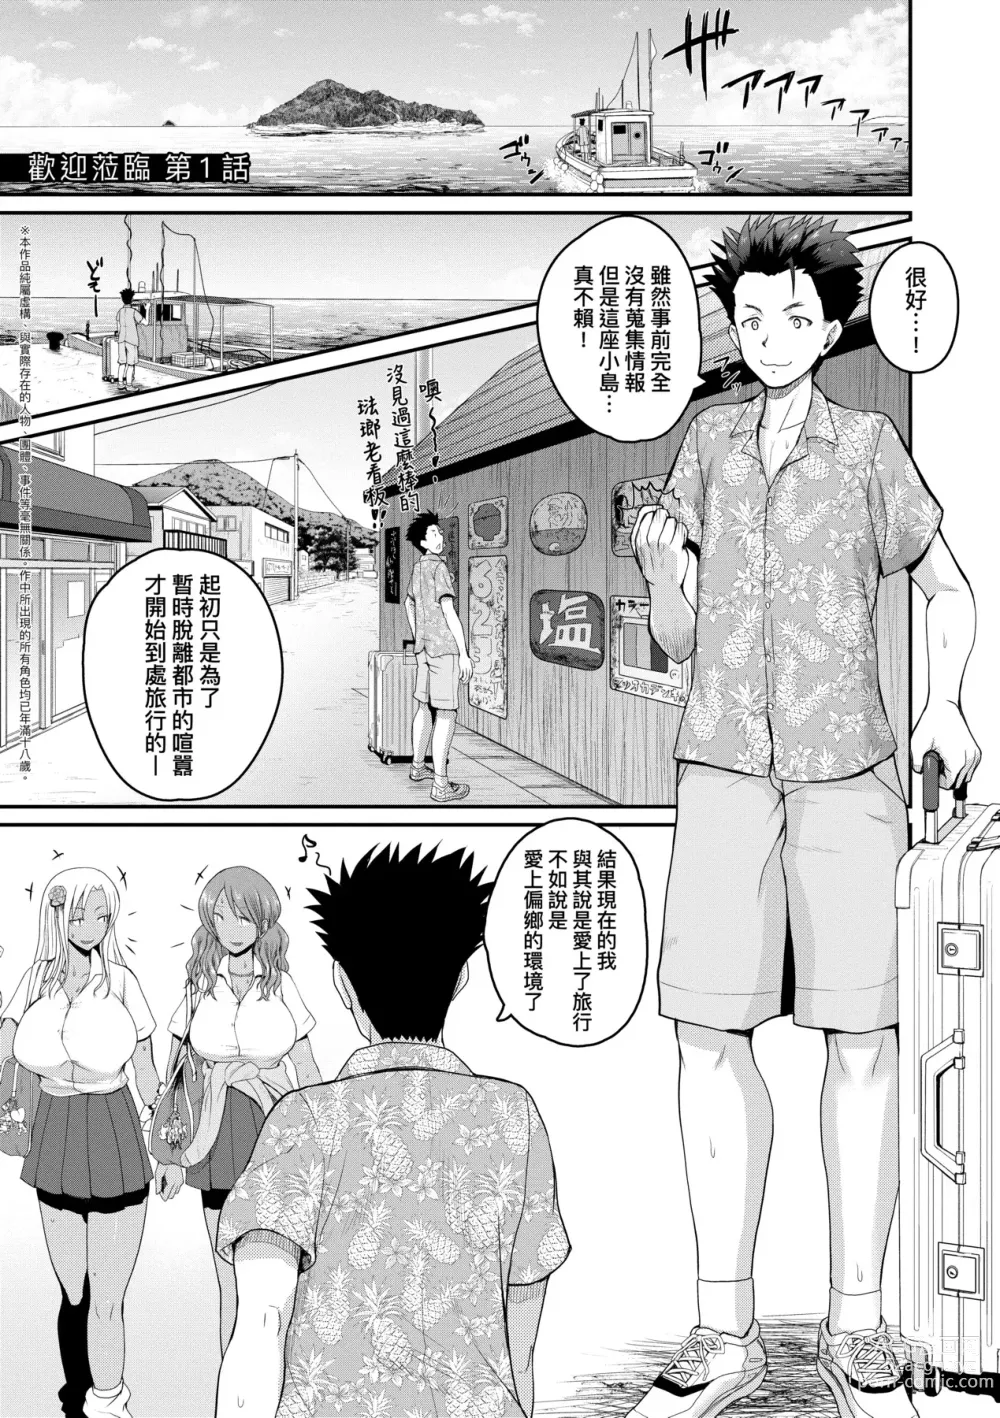 Page 10 of manga 歡迎蒞臨！SEX無限制之島到底是怎樣？ (decensored)